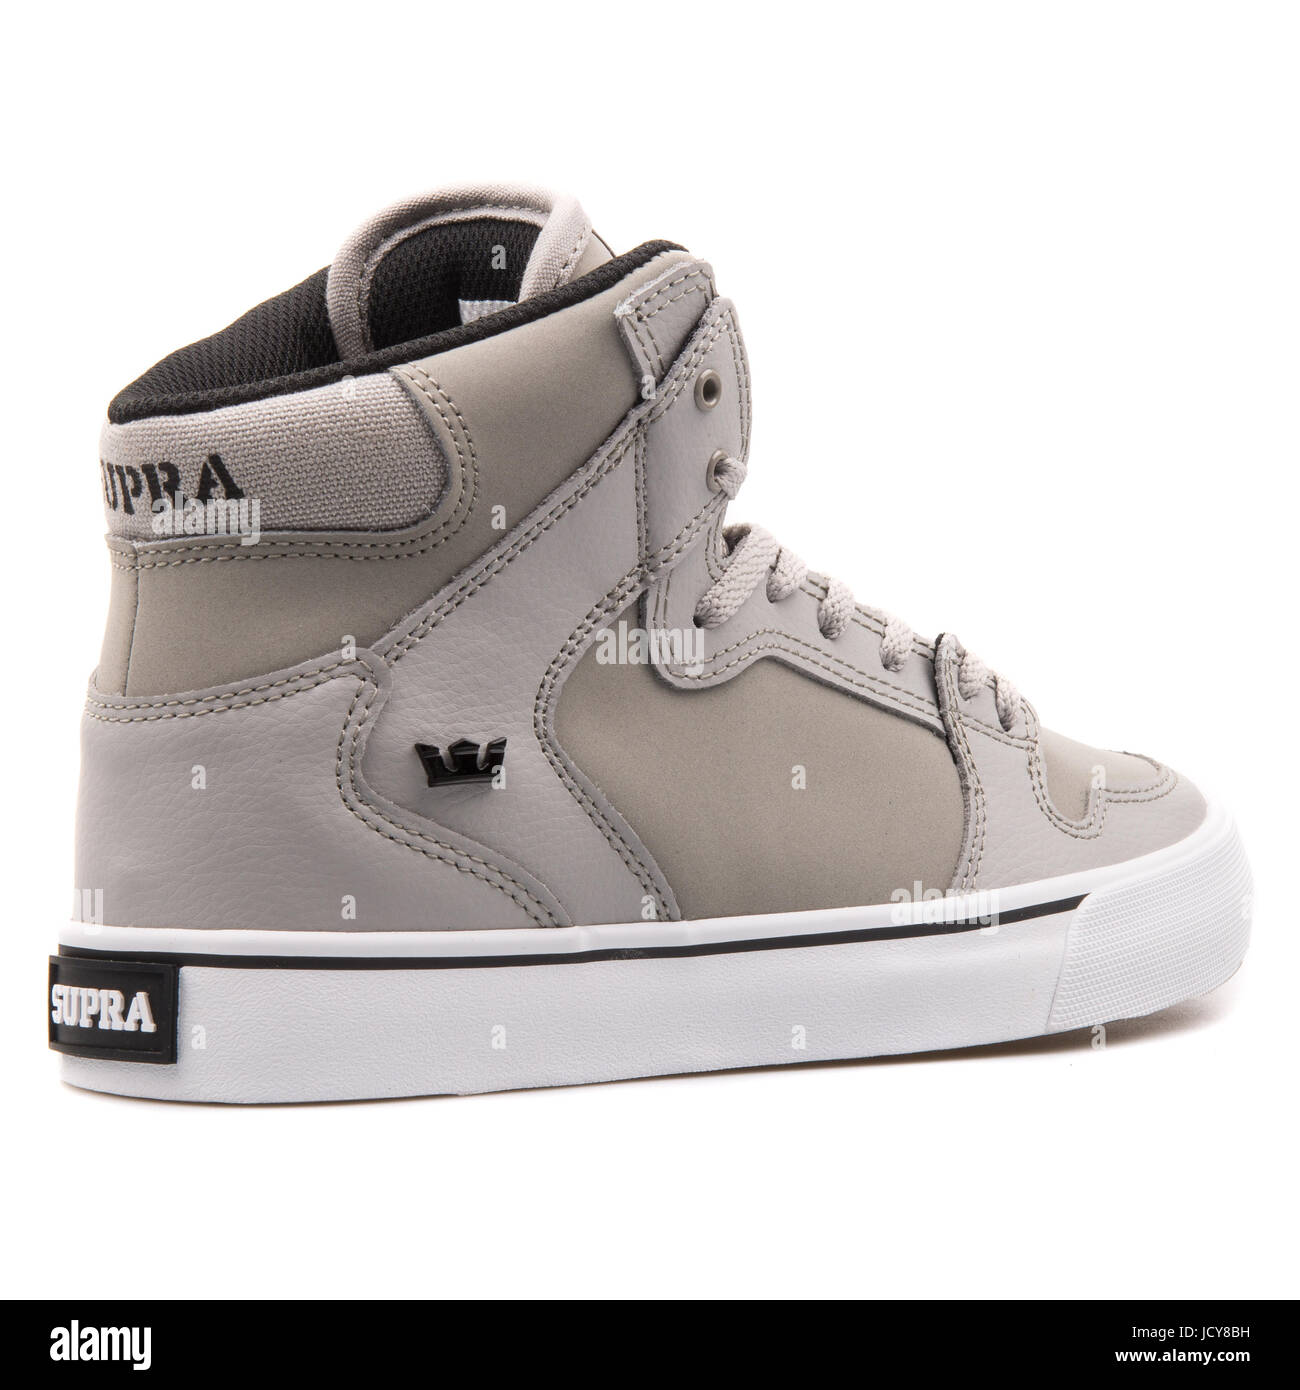 Supra Kids Vaider Grey, Black and White Sports Shoes - S11224K Stock Photo  - Alamy